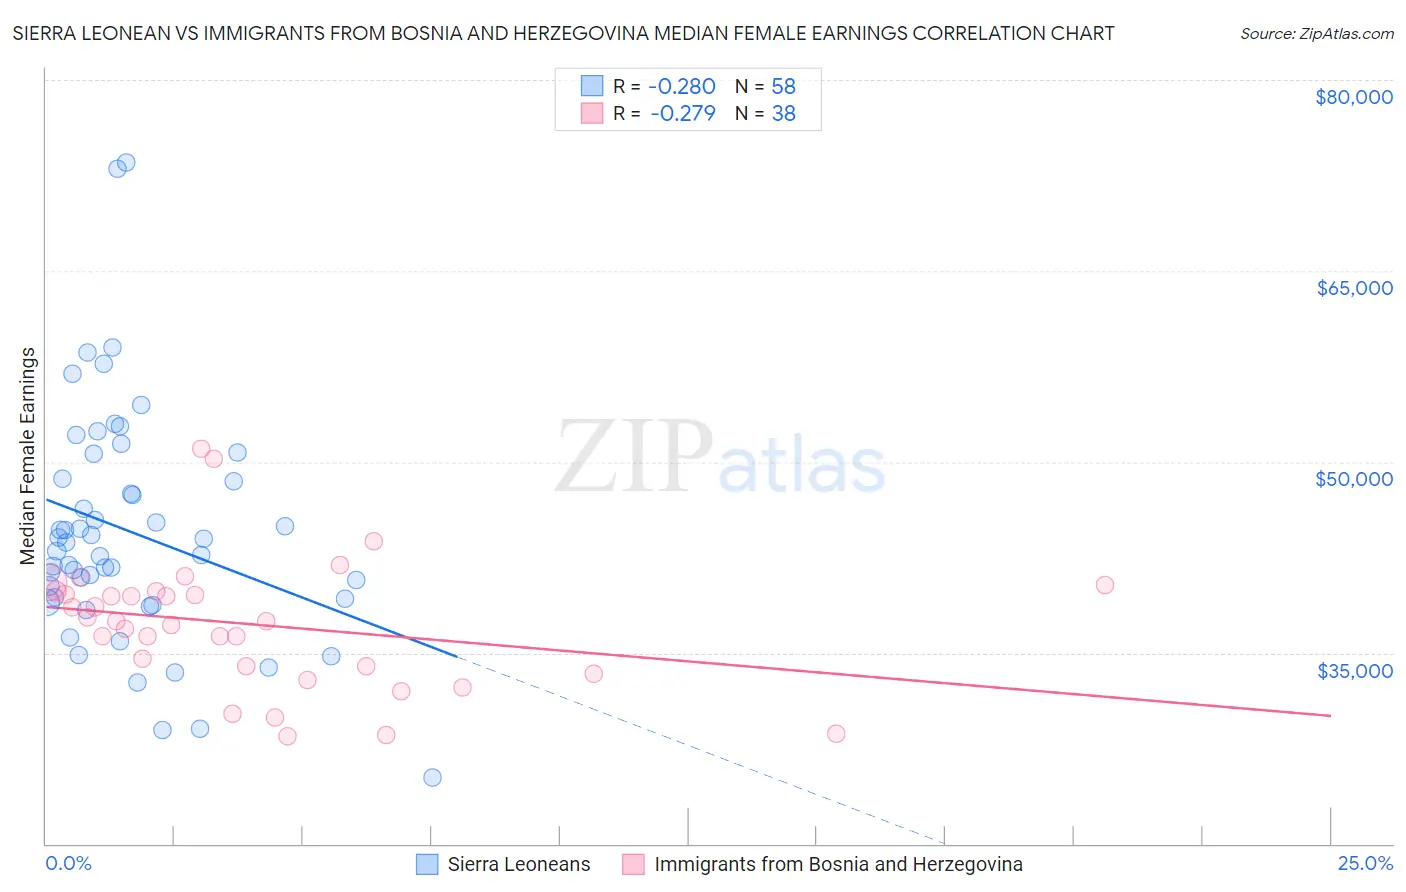 Sierra Leonean vs Immigrants from Bosnia and Herzegovina Median Female Earnings